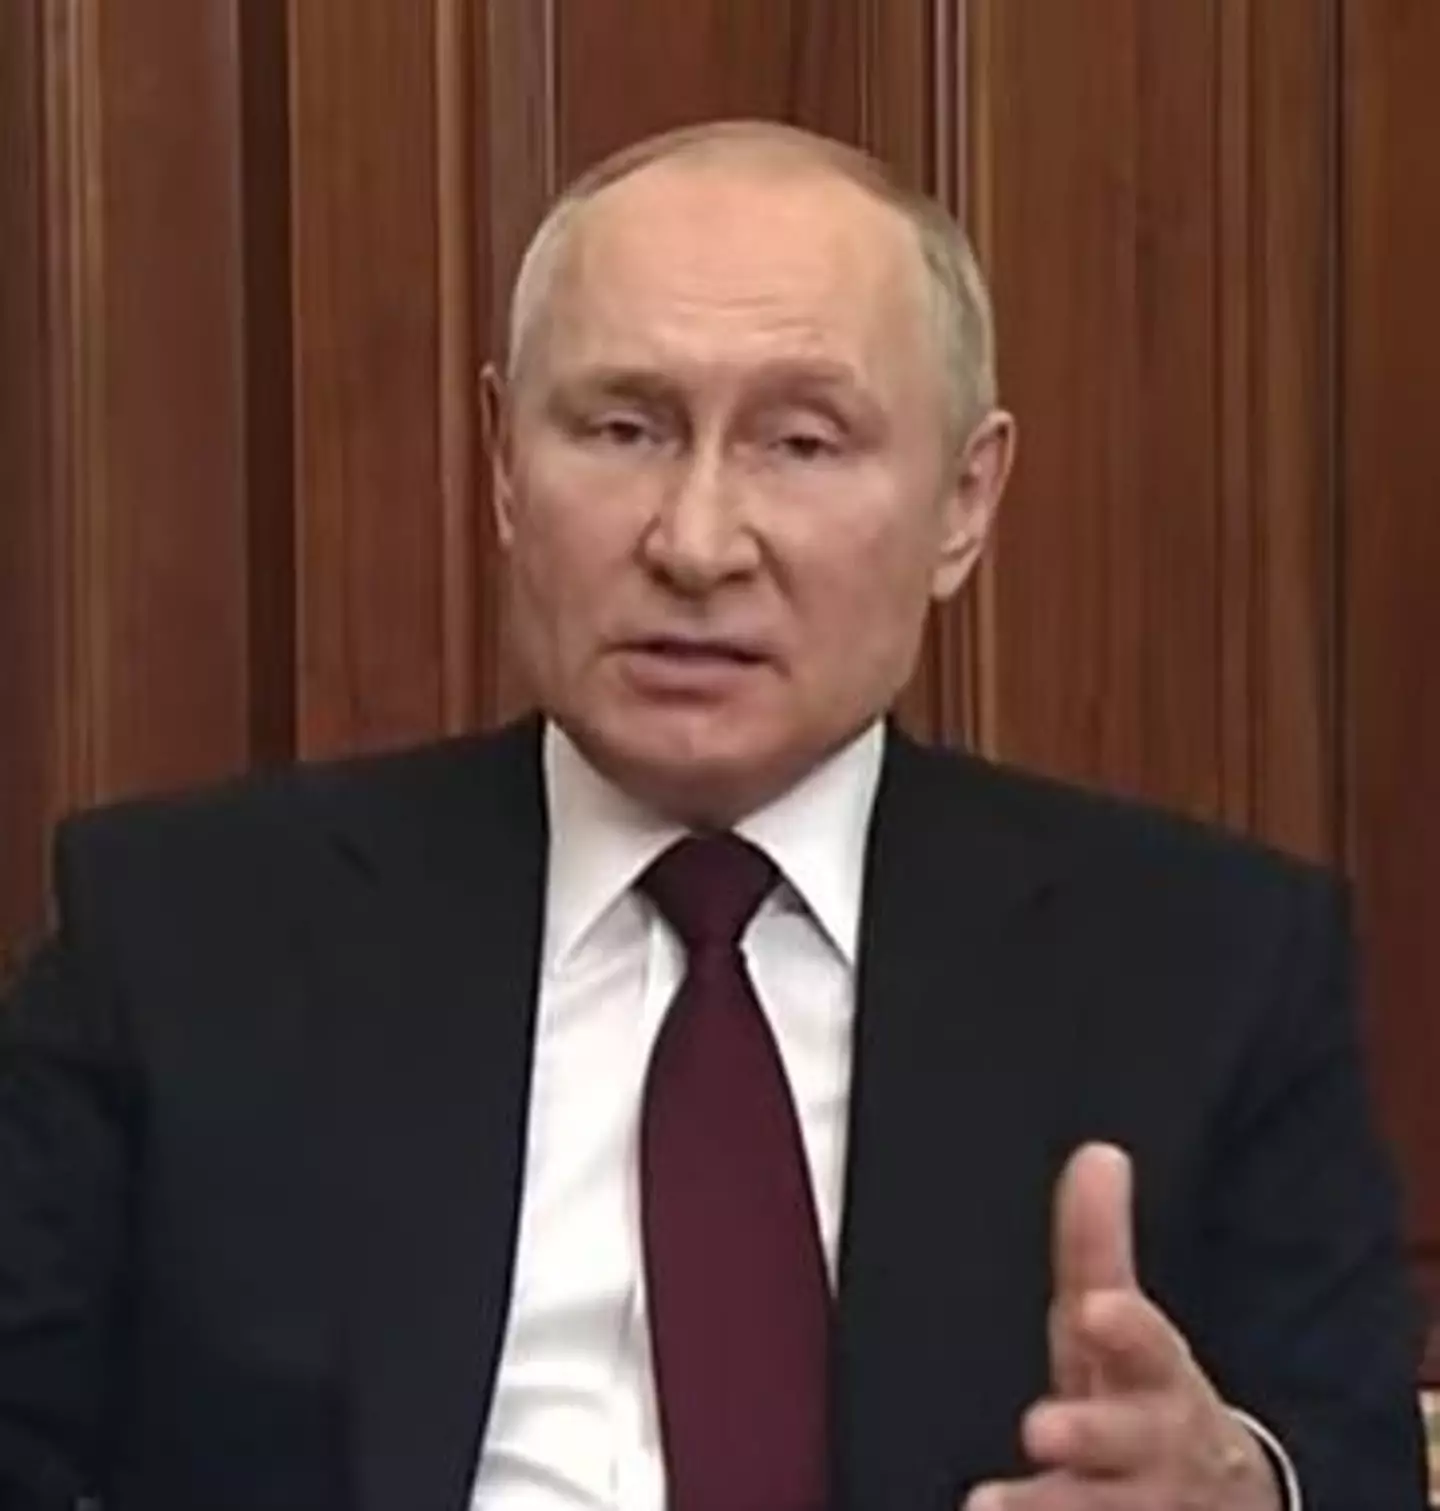 Russia's president Vladimir Putin.